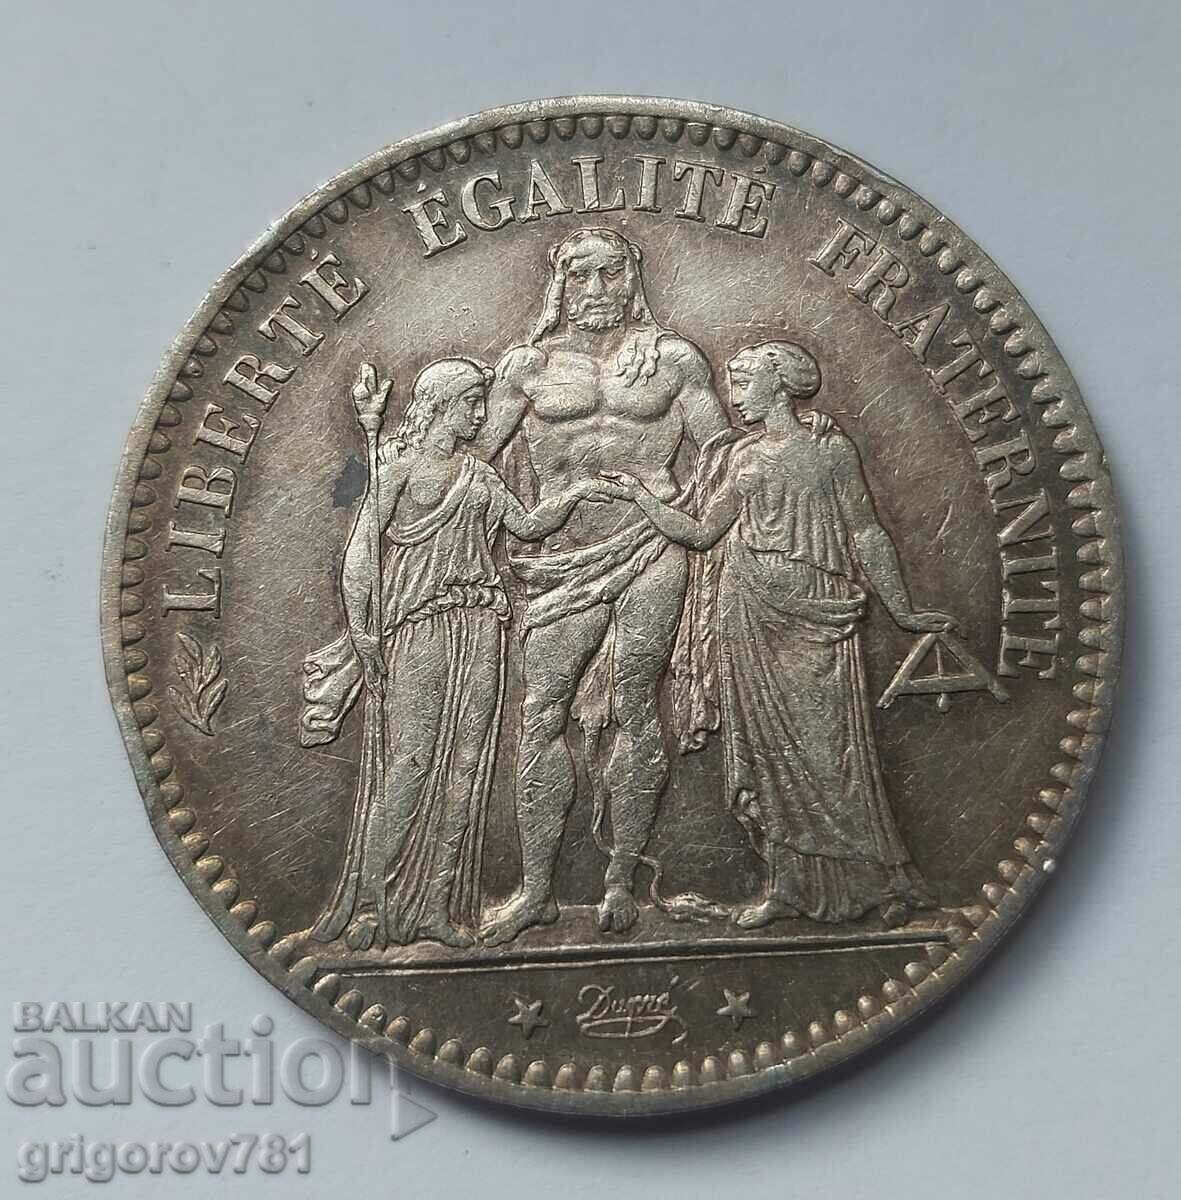 5 Francs Silver France 1876 A Silver Coin #142